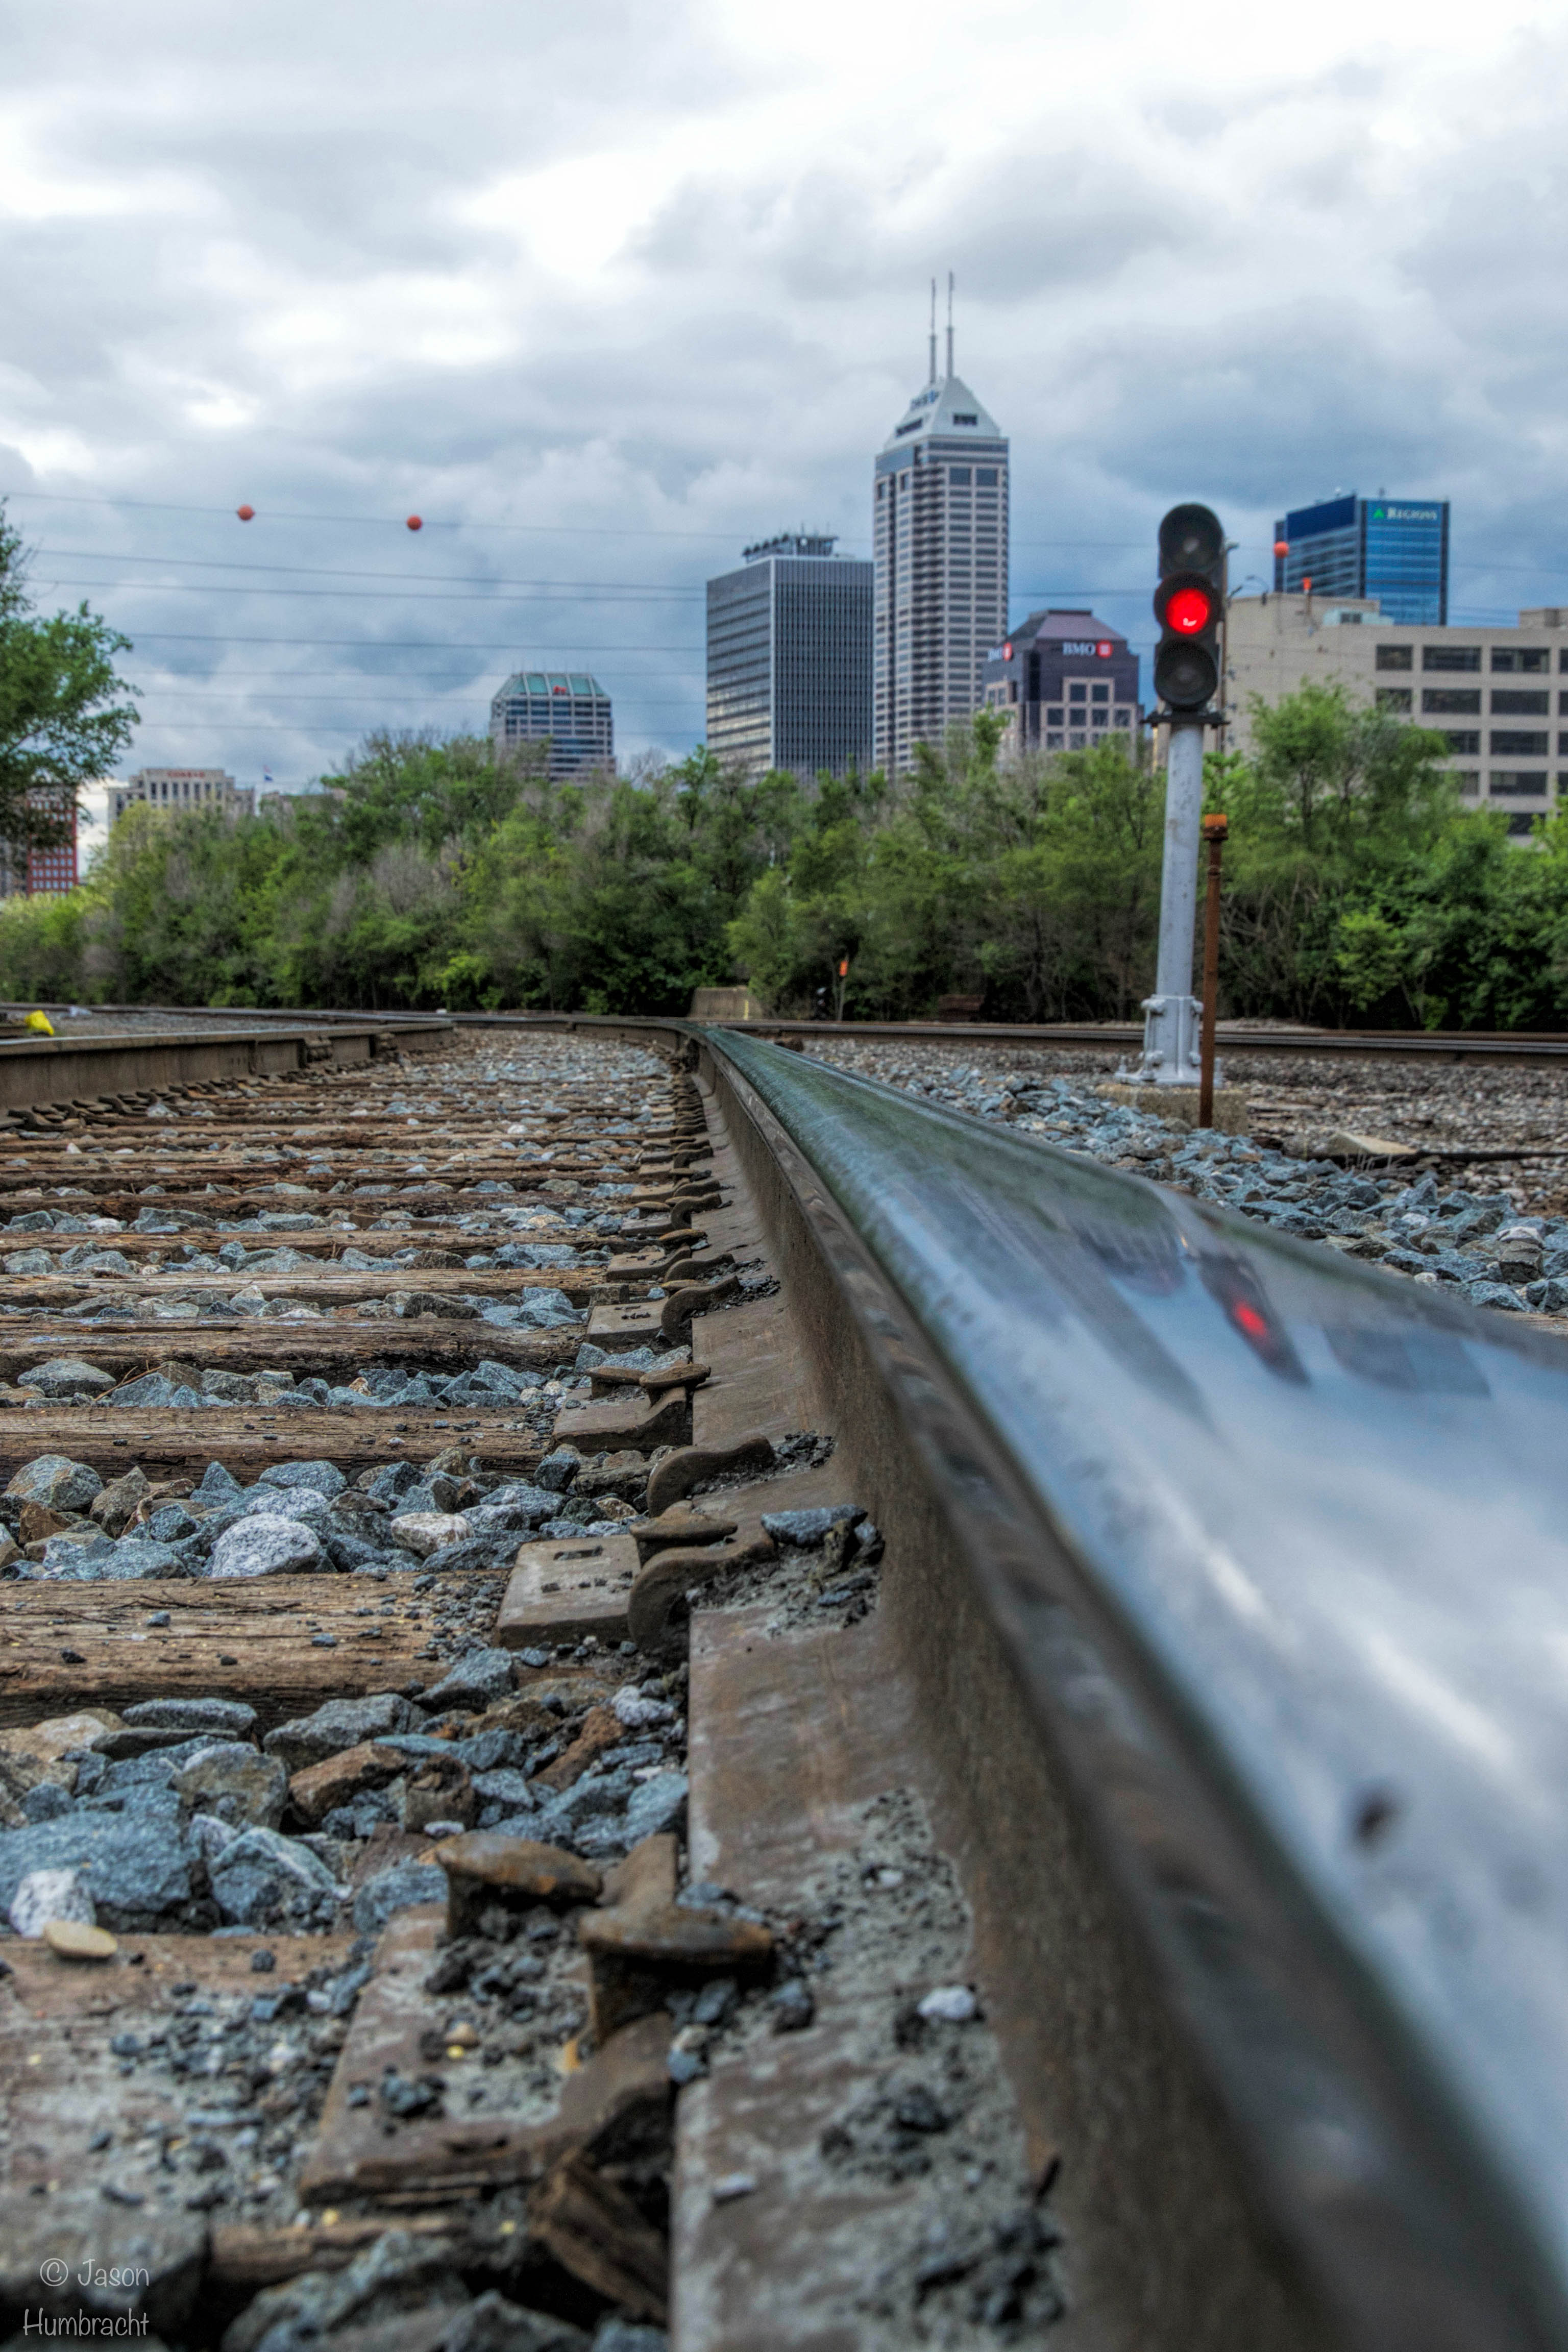 Train Tracks | Indianapolis Skyline | Image By Indiana Architectural Photographer Jason Humbracht